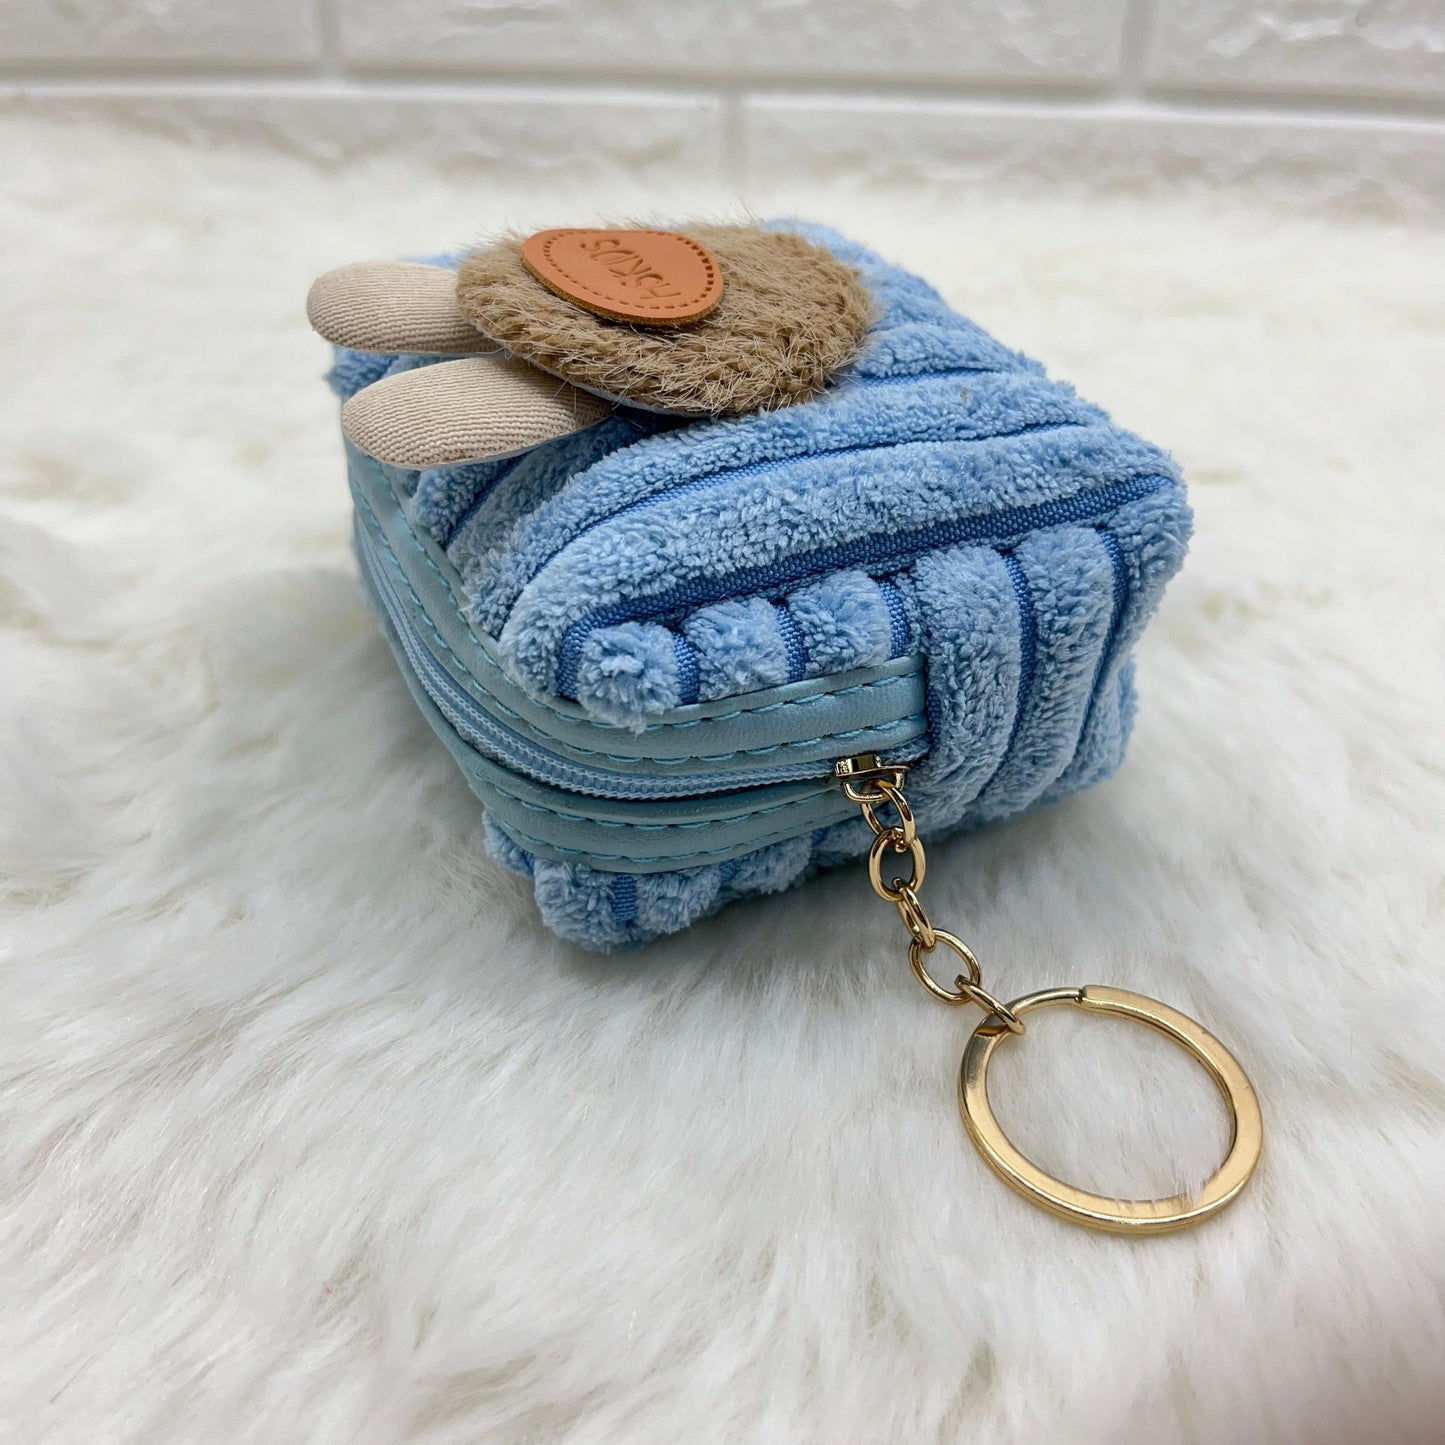 BATUTA - Zipper Mini Reversible teddy bear Purse Keychain Pouch Bag (Multicolour, 10 x 7 x 5cm